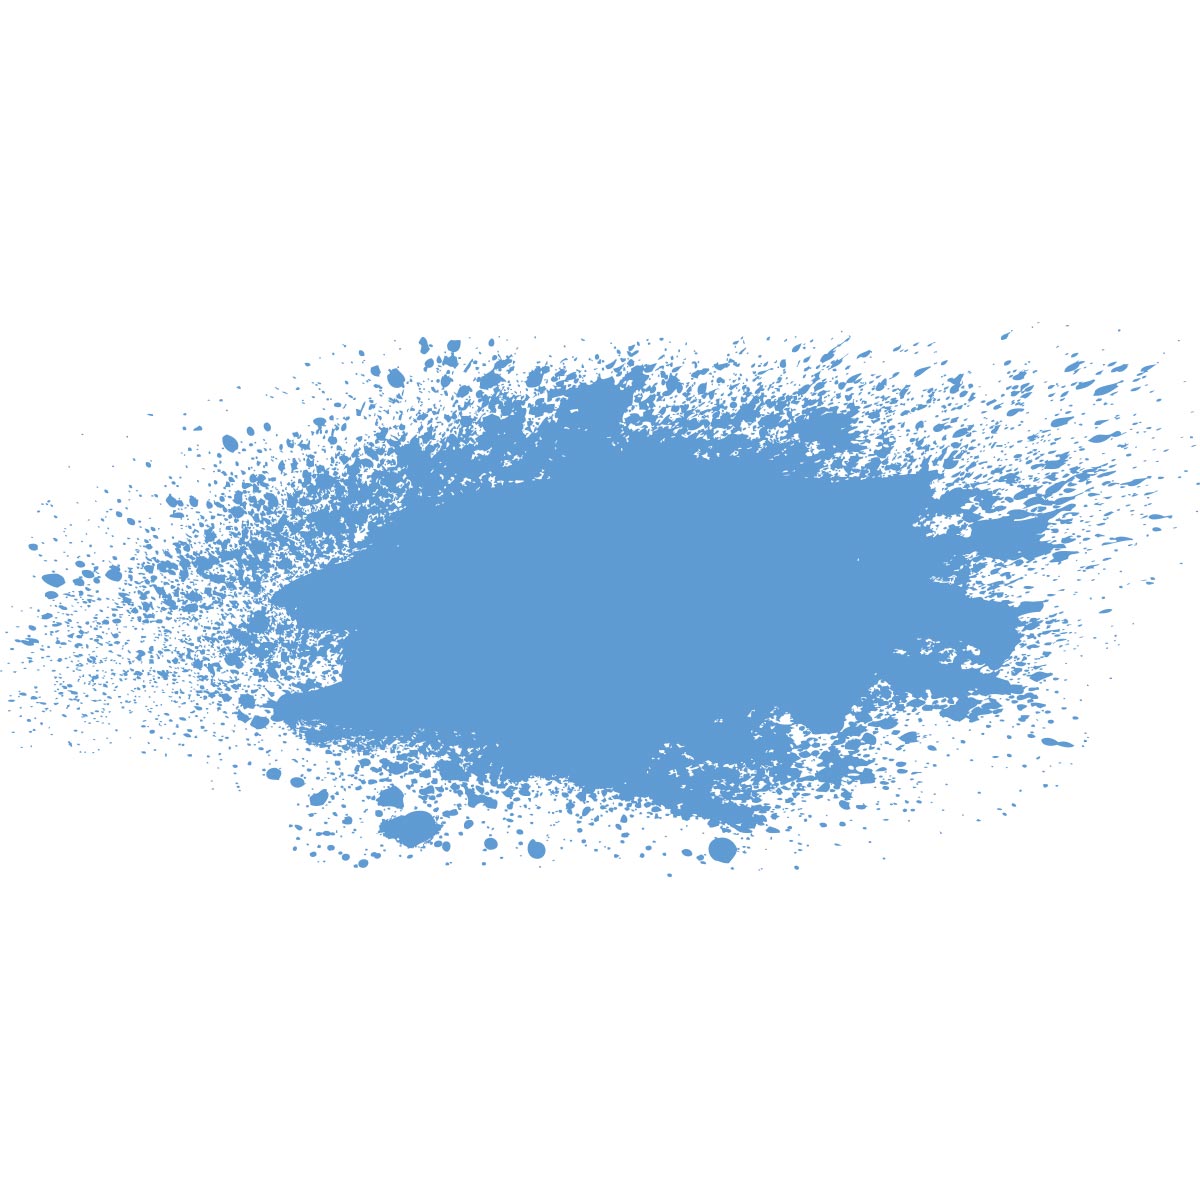 FolkArt ® Stencil Spray™ Acrylic Paint - Bright Blue, 2 oz. - 6191